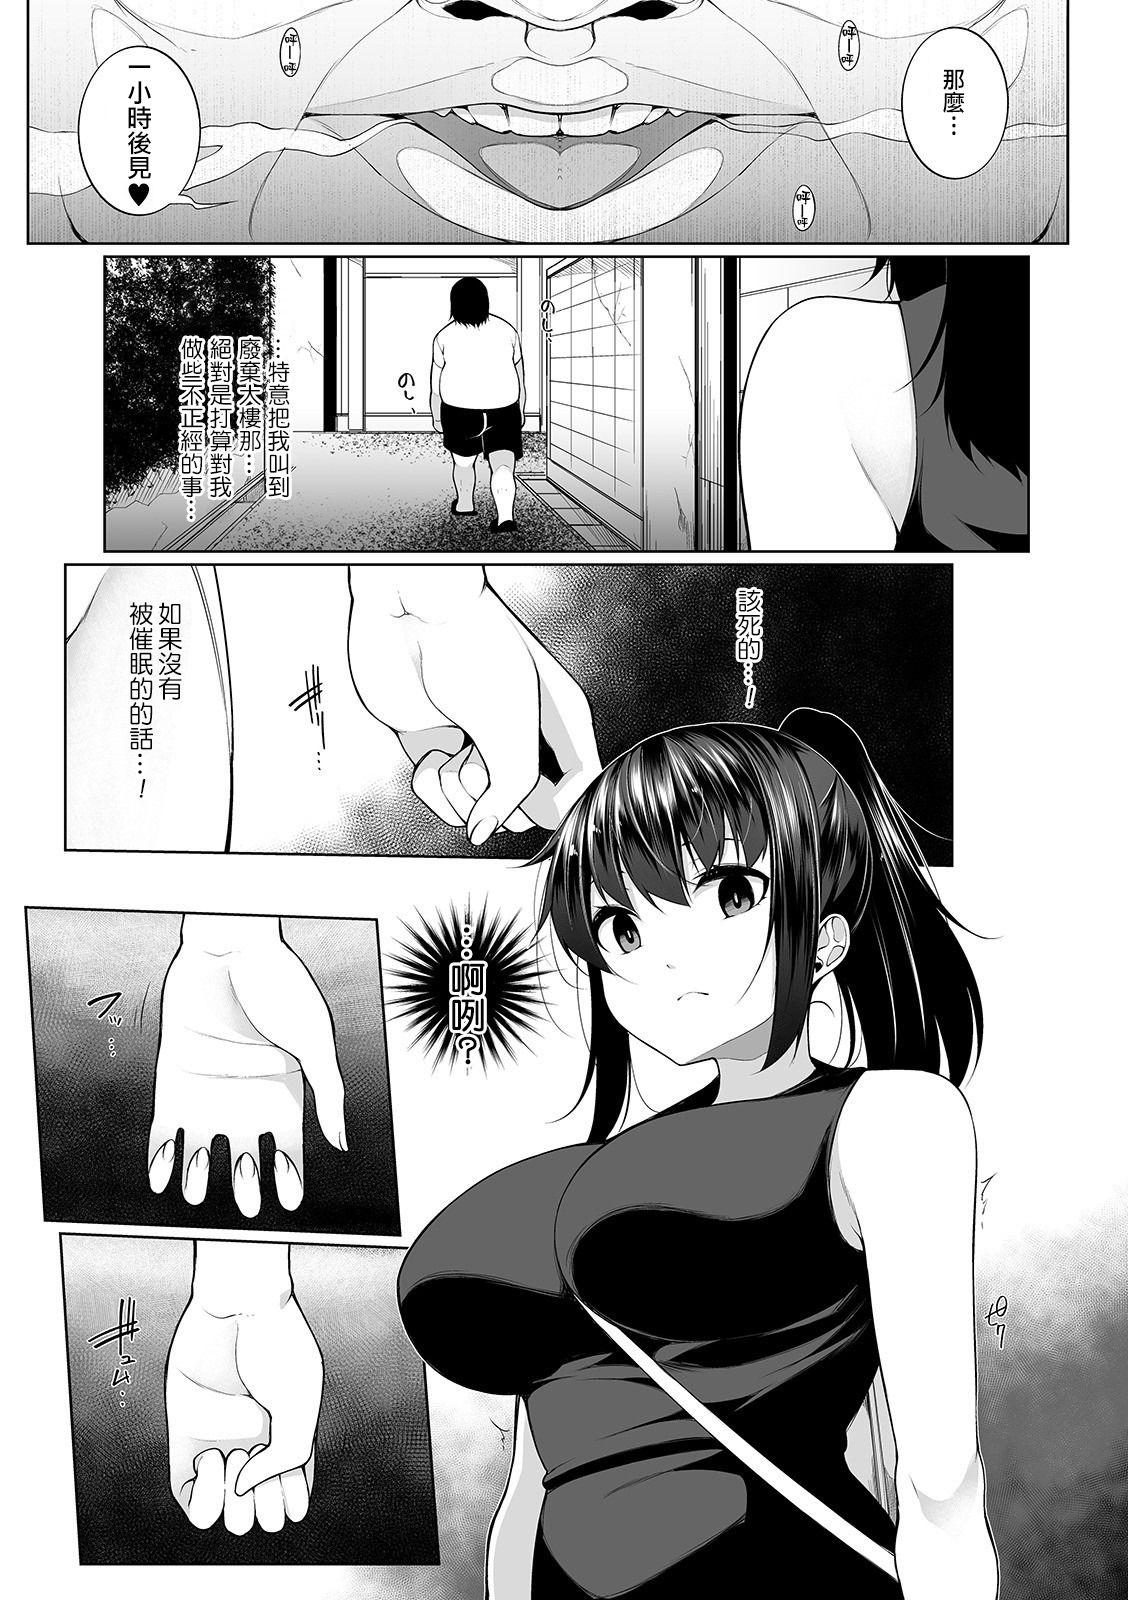 HYPNO BLINK 4 Page 5 Of 24 hentai comic, HYPNO BLINK 4 Page 5 Of 24 hentai doujinshi...